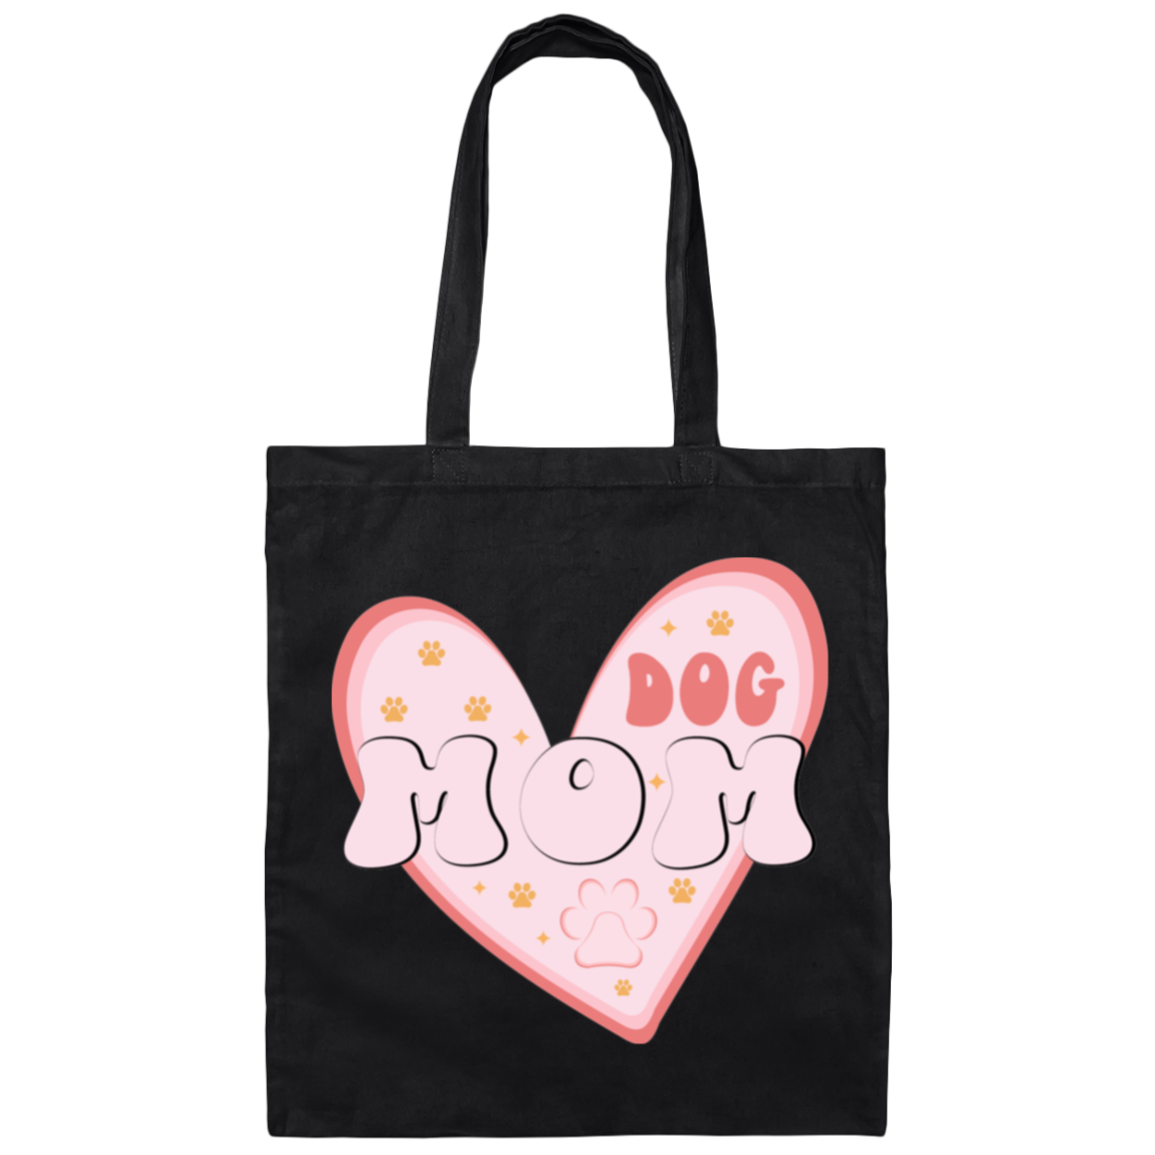 Dog Mom Heart Canvas Tote Bag